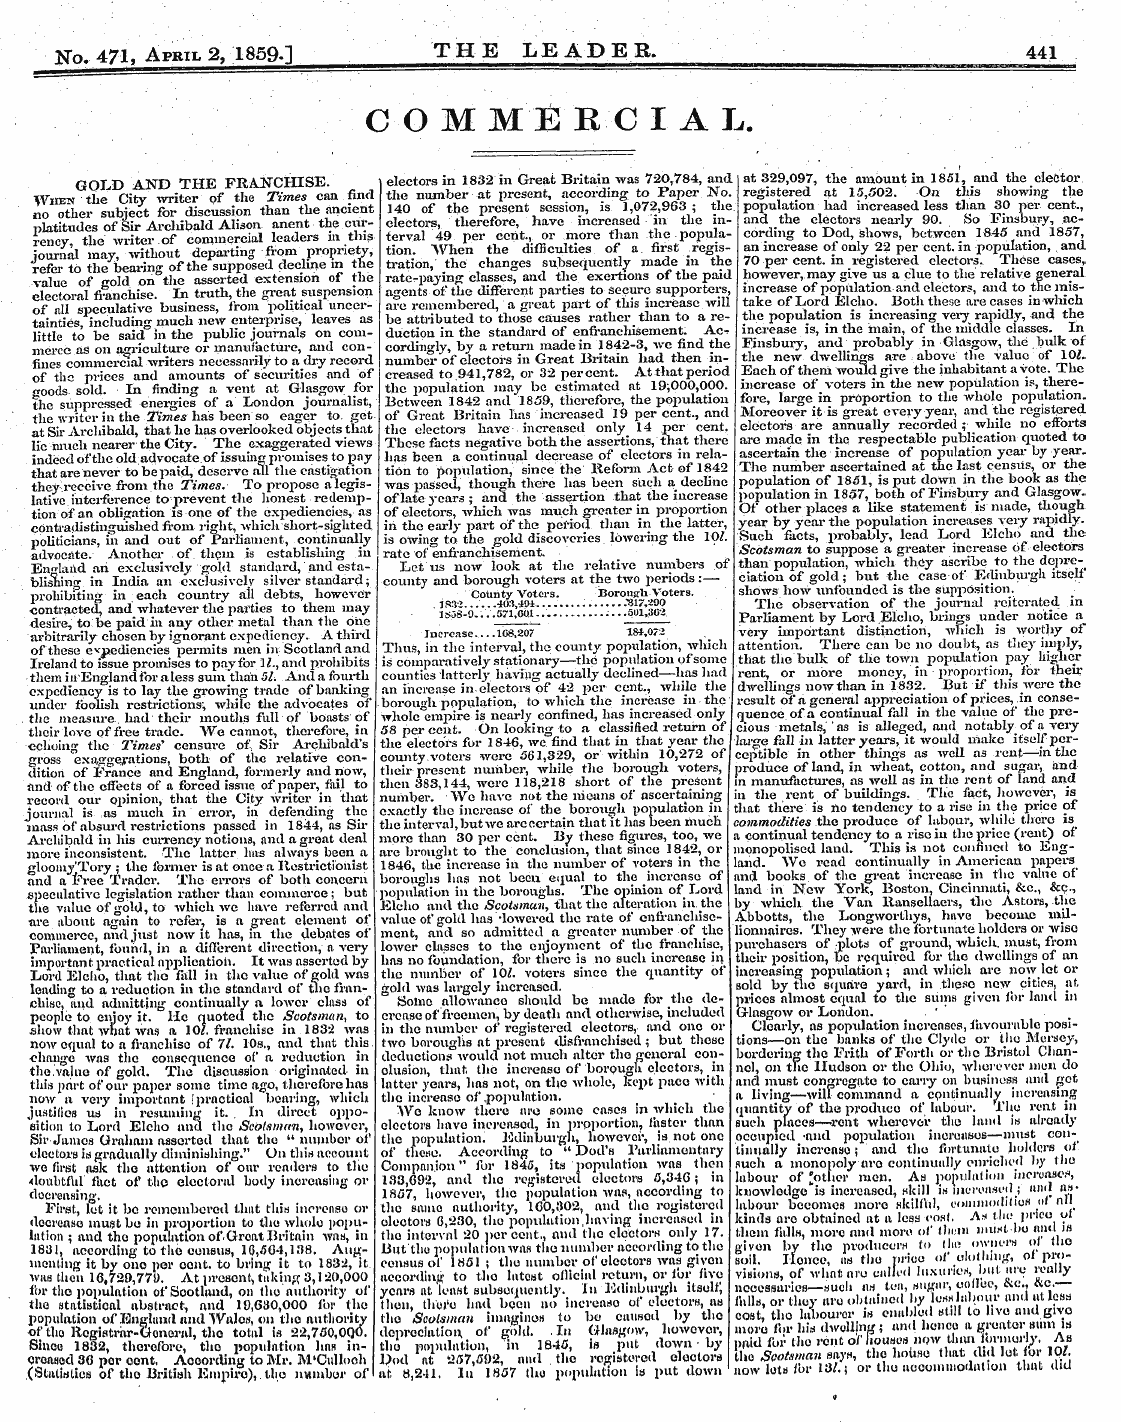 Leader (1850-1860): jS F Y, 2nd edition - Co Mmiec I Al.